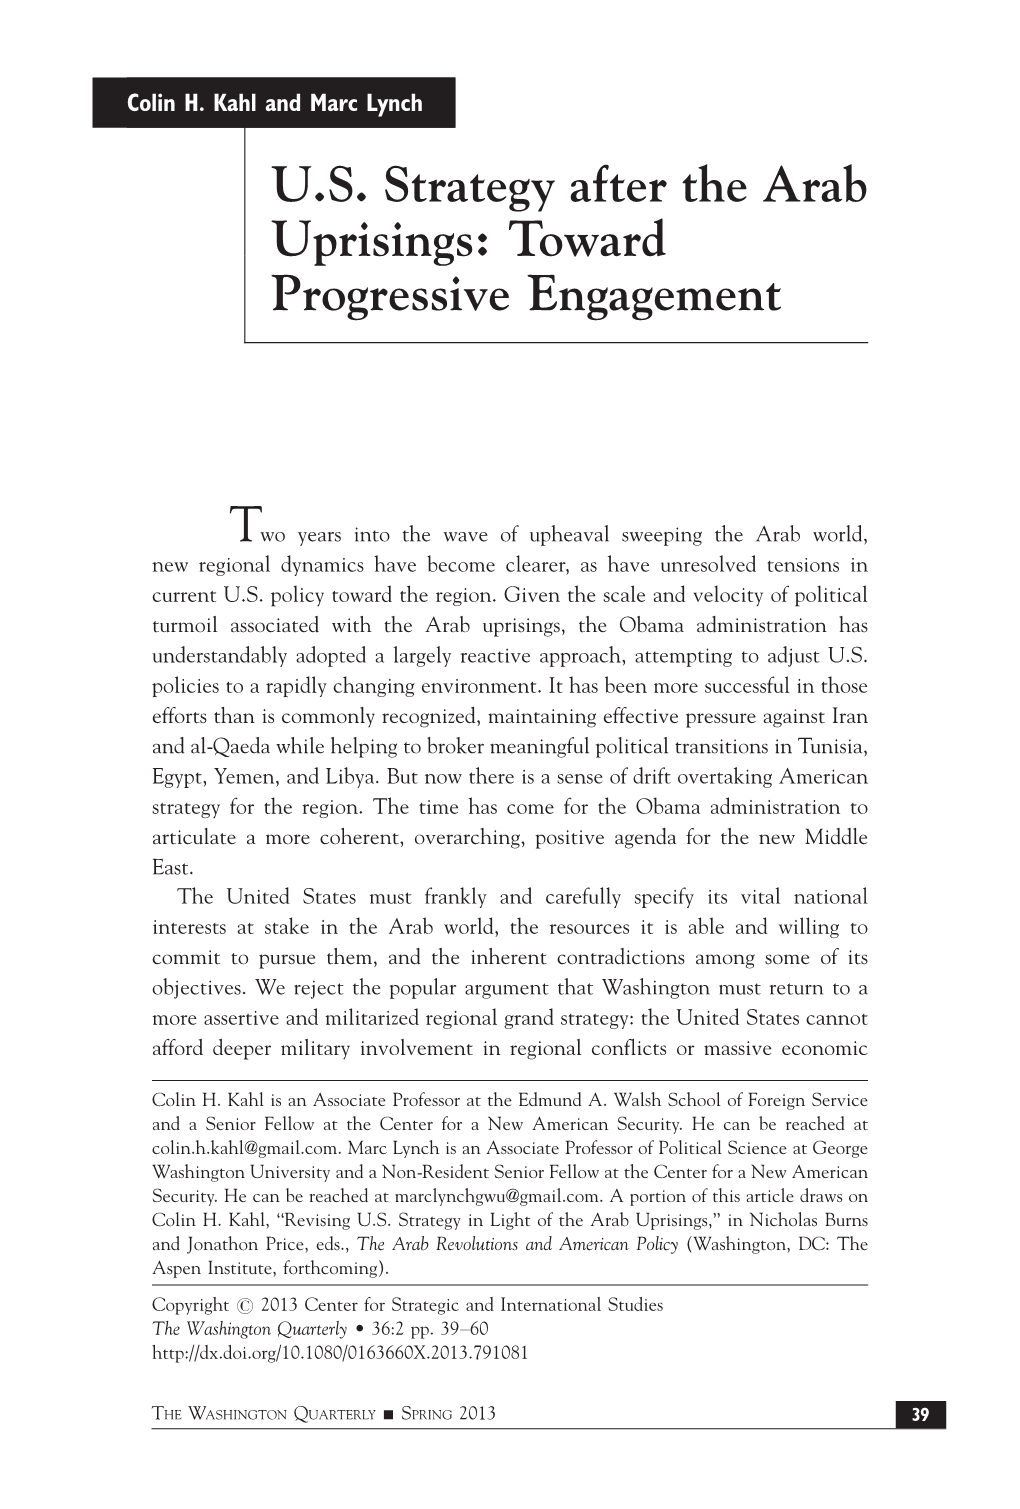 U.S. Strategy After the Arab Uprisings: Toward Progressive Engagement